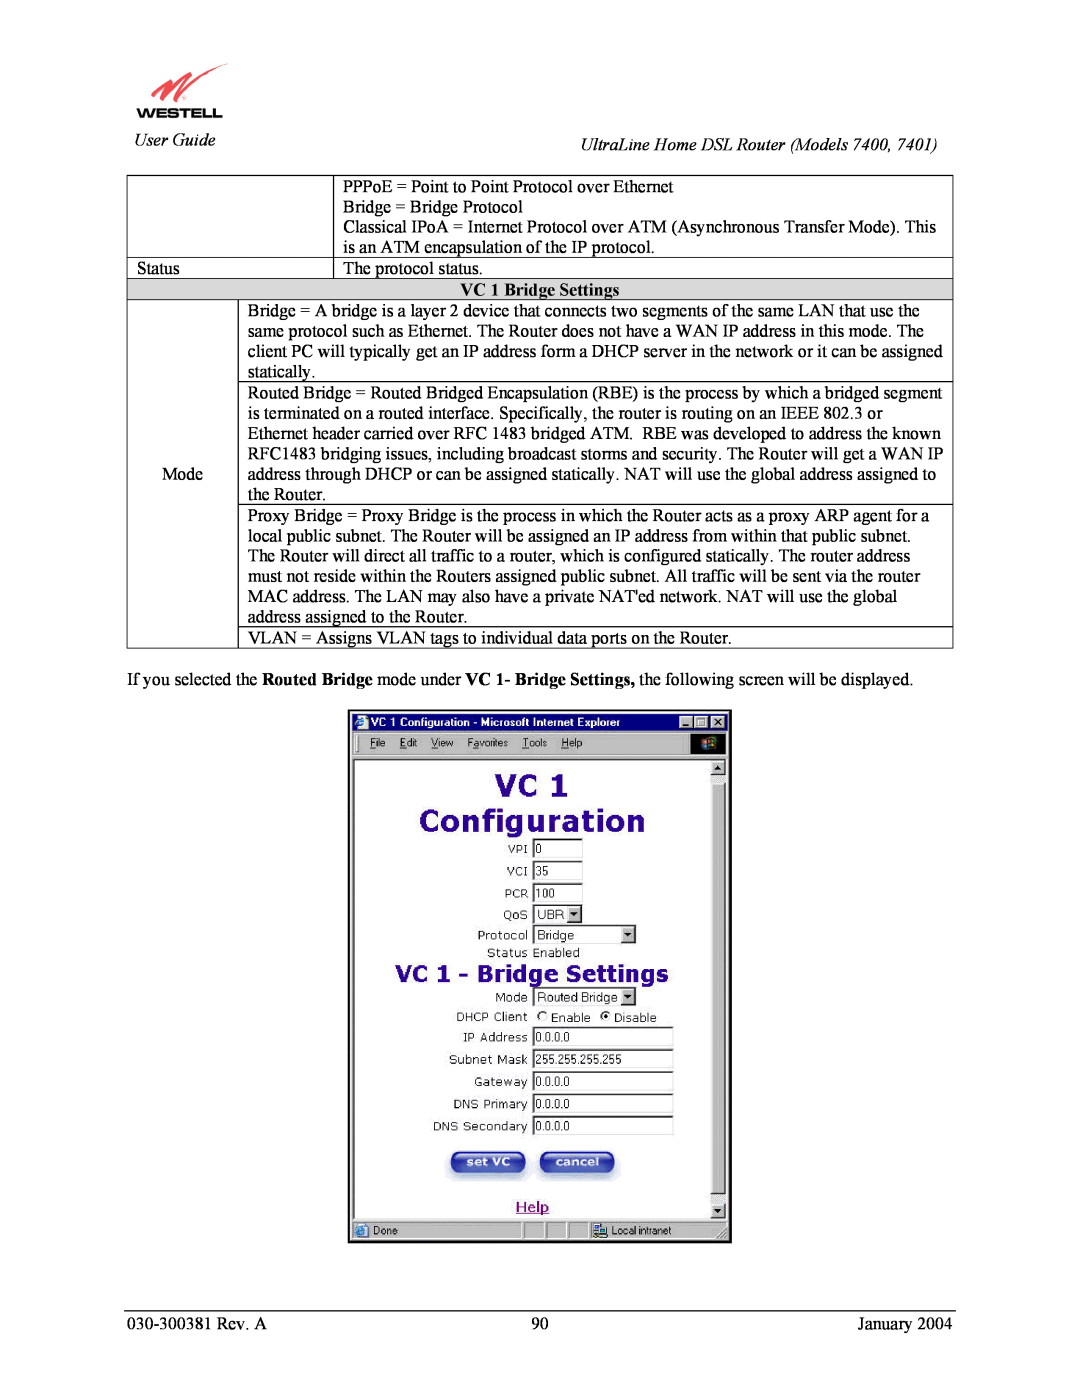 Westell Technologies 7401, 7400 manual VC 1 Bridge Settings, 030-300381 Rev. A, January 